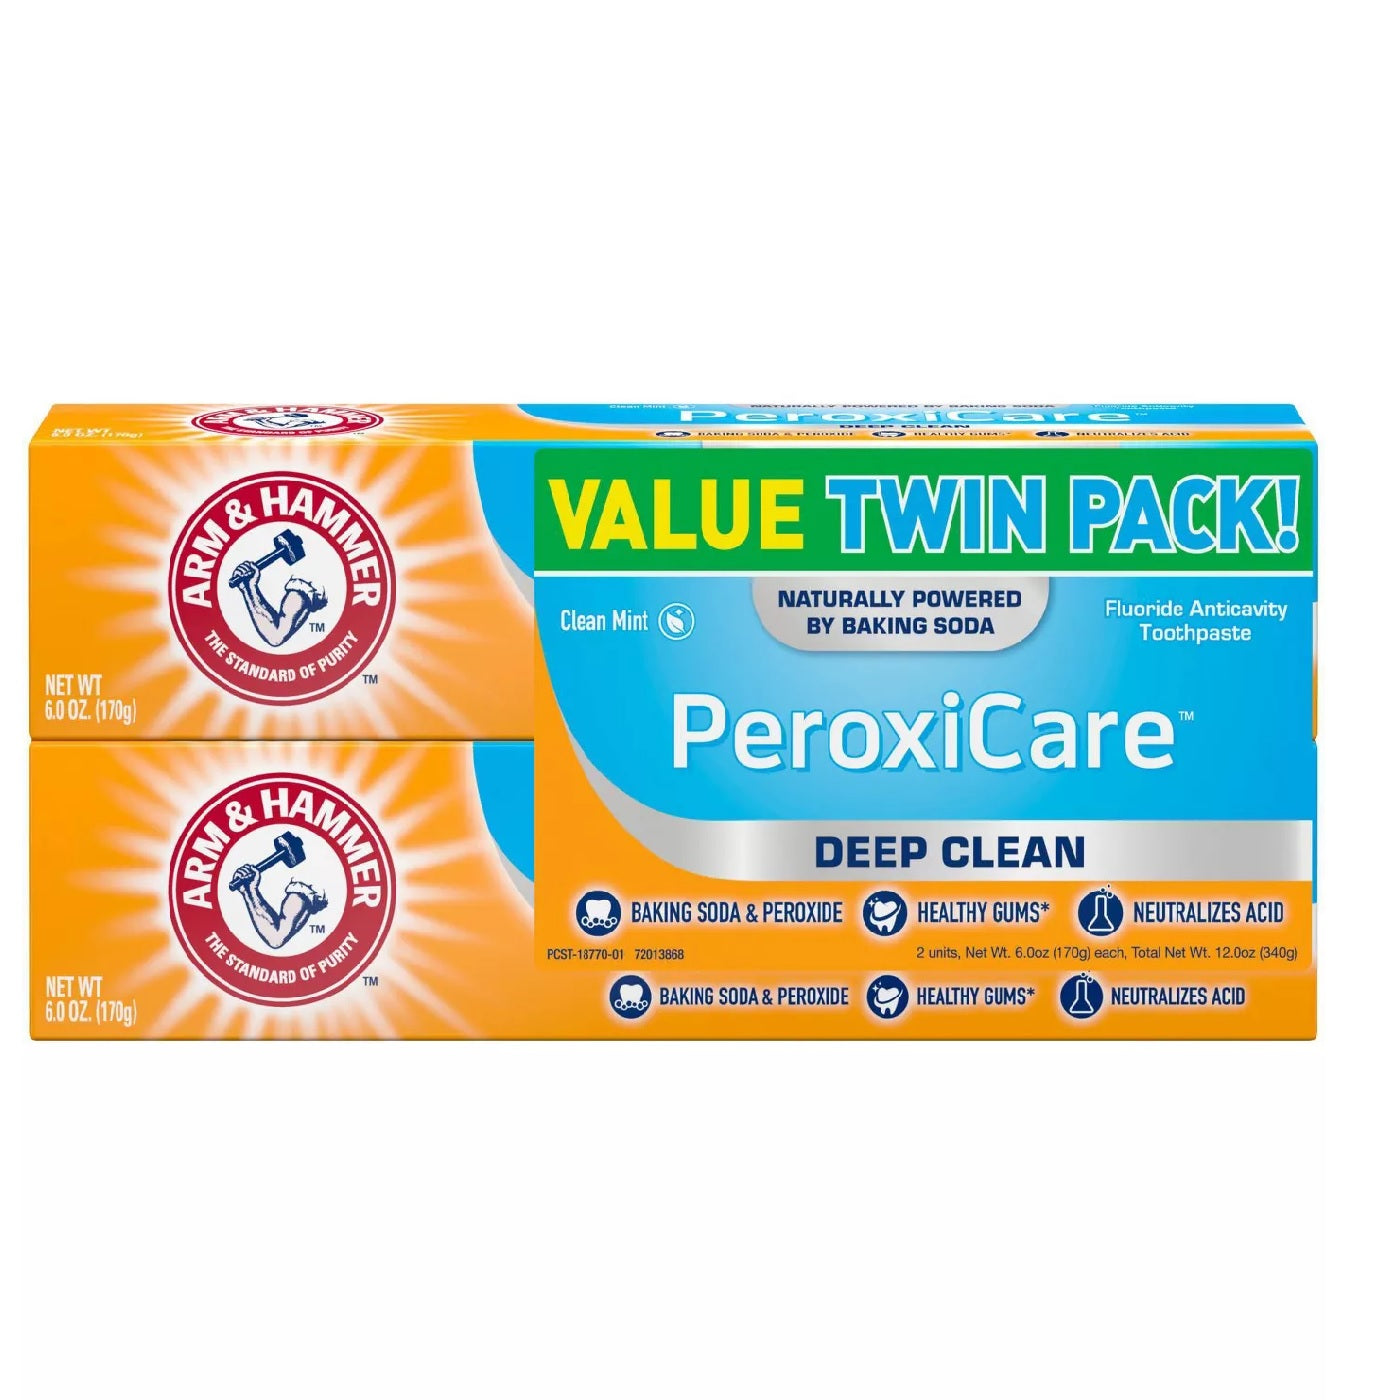 AHDC Peroxicare Tartar Control Toothpaste Twin Pack - 2x6oz/6pk